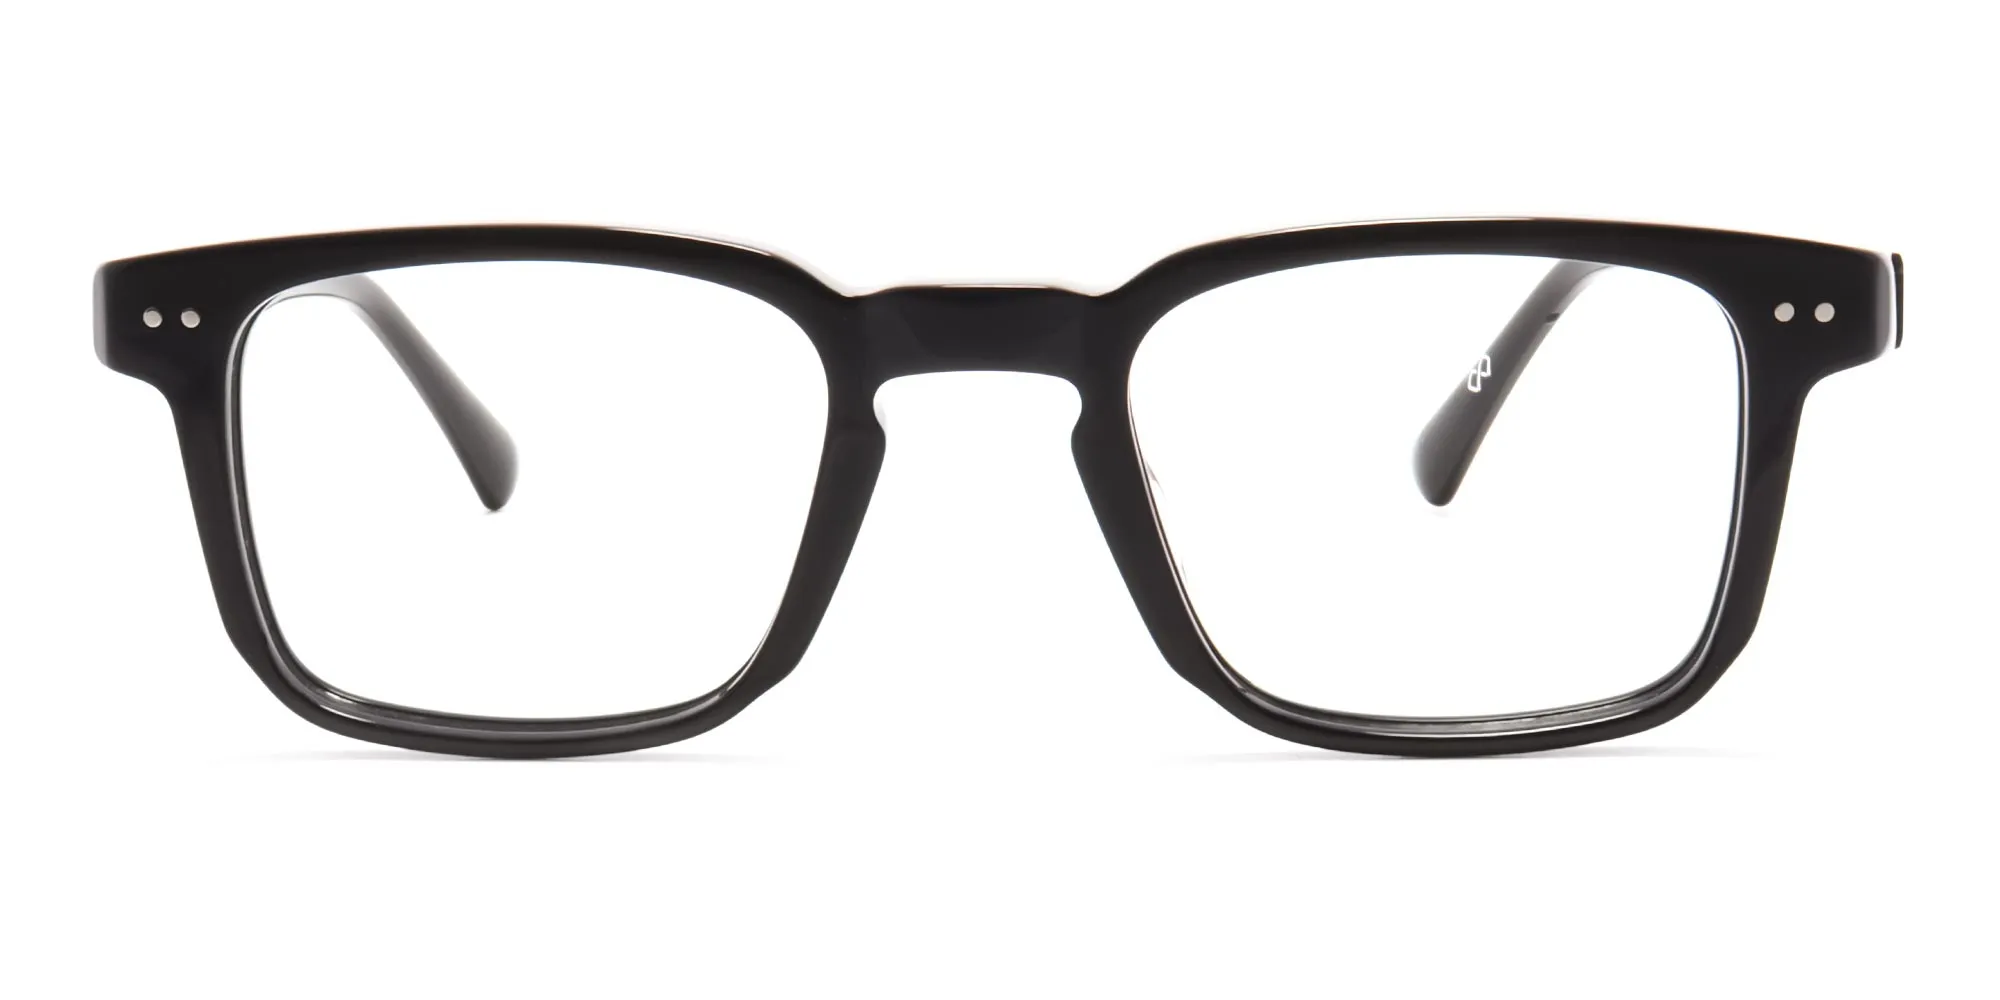 classic square eyeglasses frames 